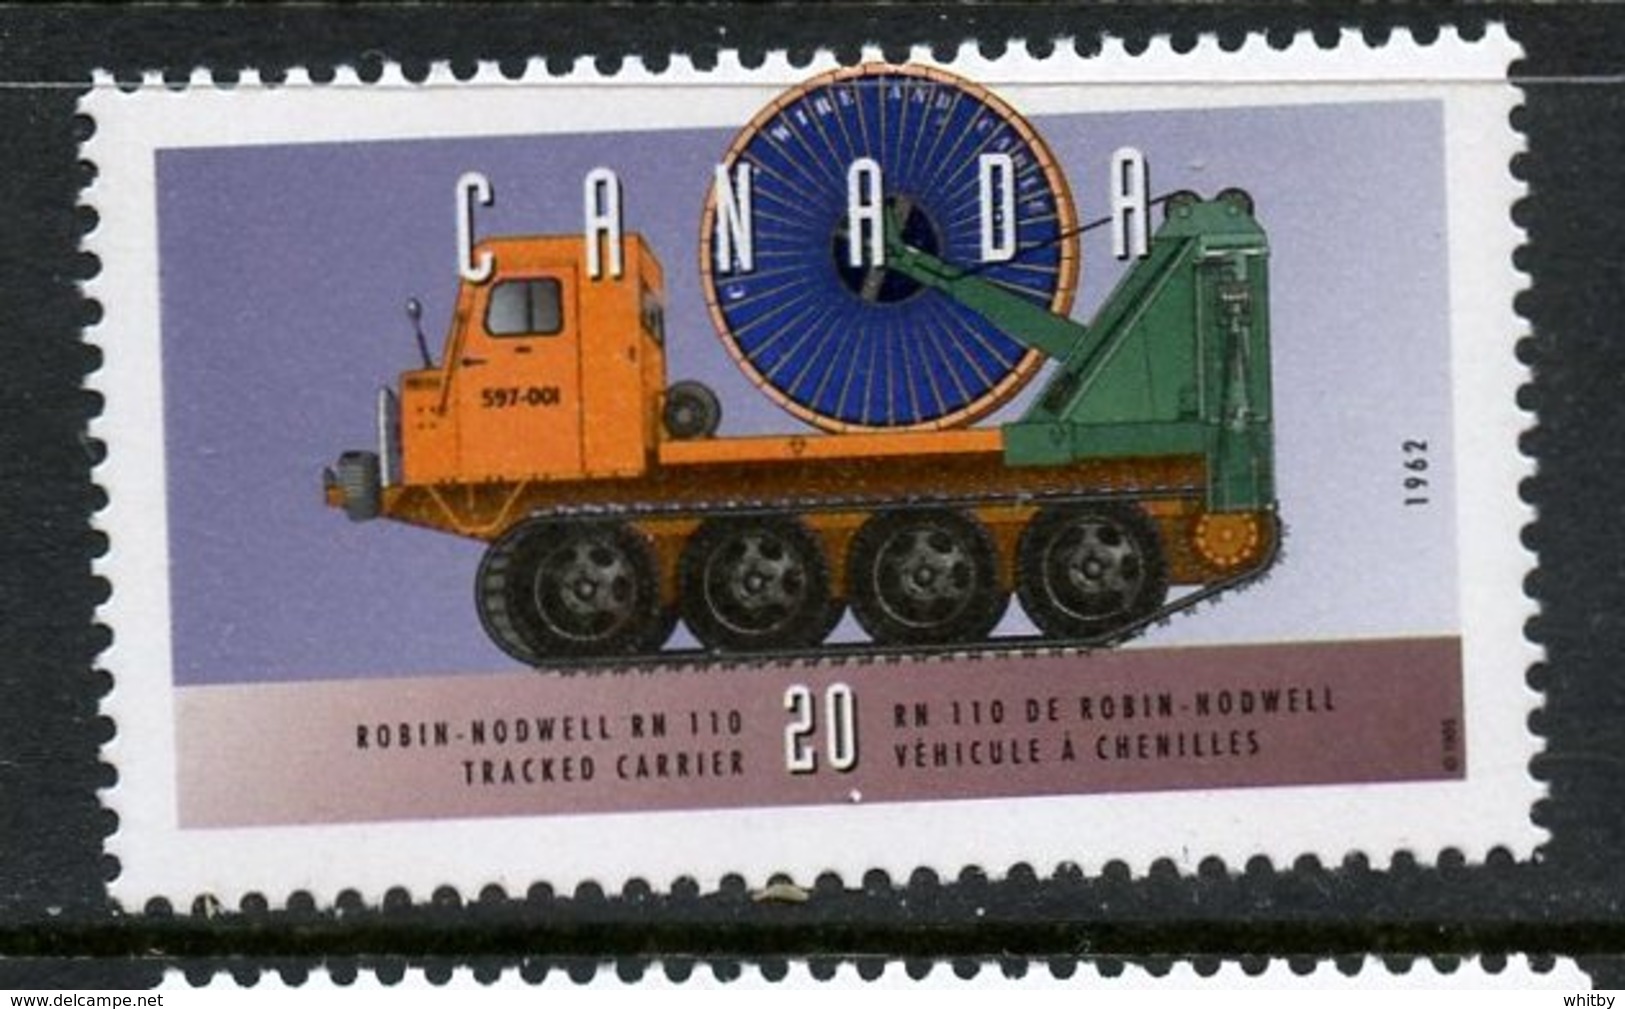 Canada 1996  20 Cent Robin Nodwell Carrier Issue  #1605w  MNH - Neufs